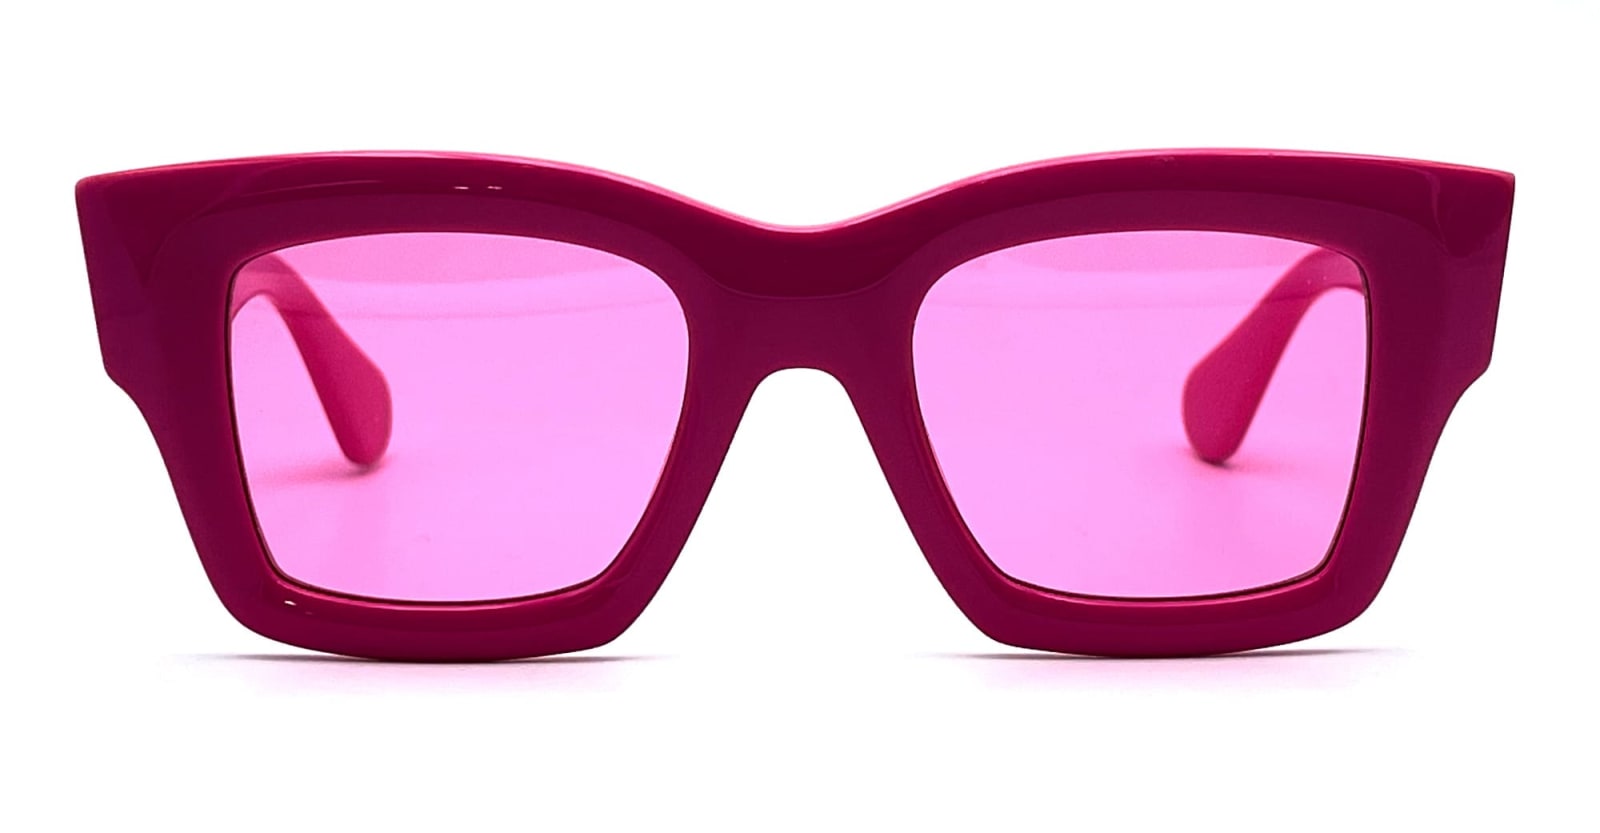 Les Lunettes Baci - Pink Sunglasses